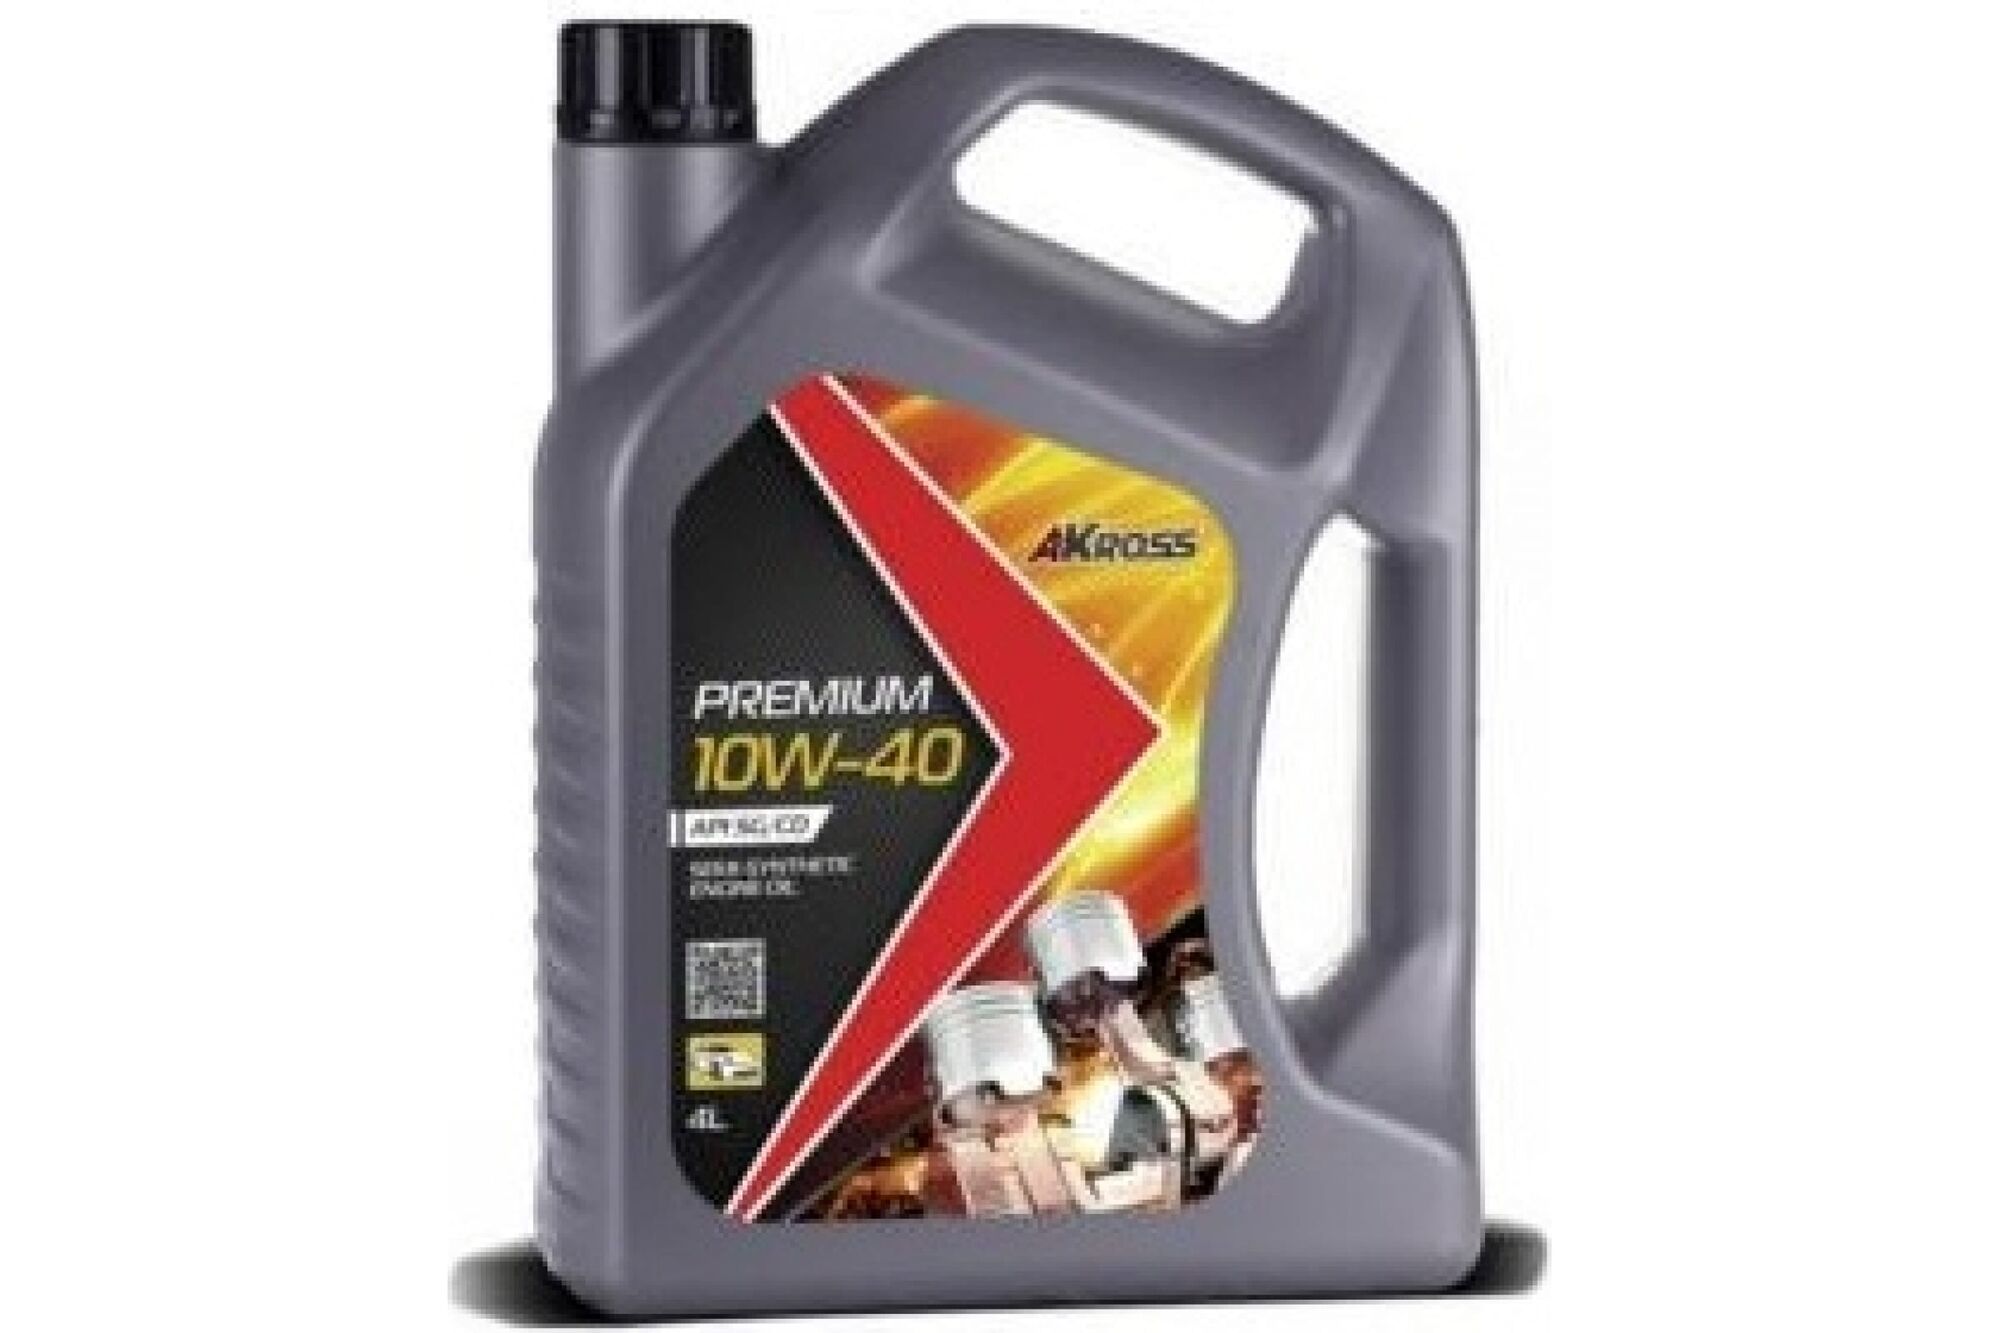 Моторное масло AKross PREMIUM полусинтетическое, 10W-40, SG/CD, 4 л AKS0007MOS Premium